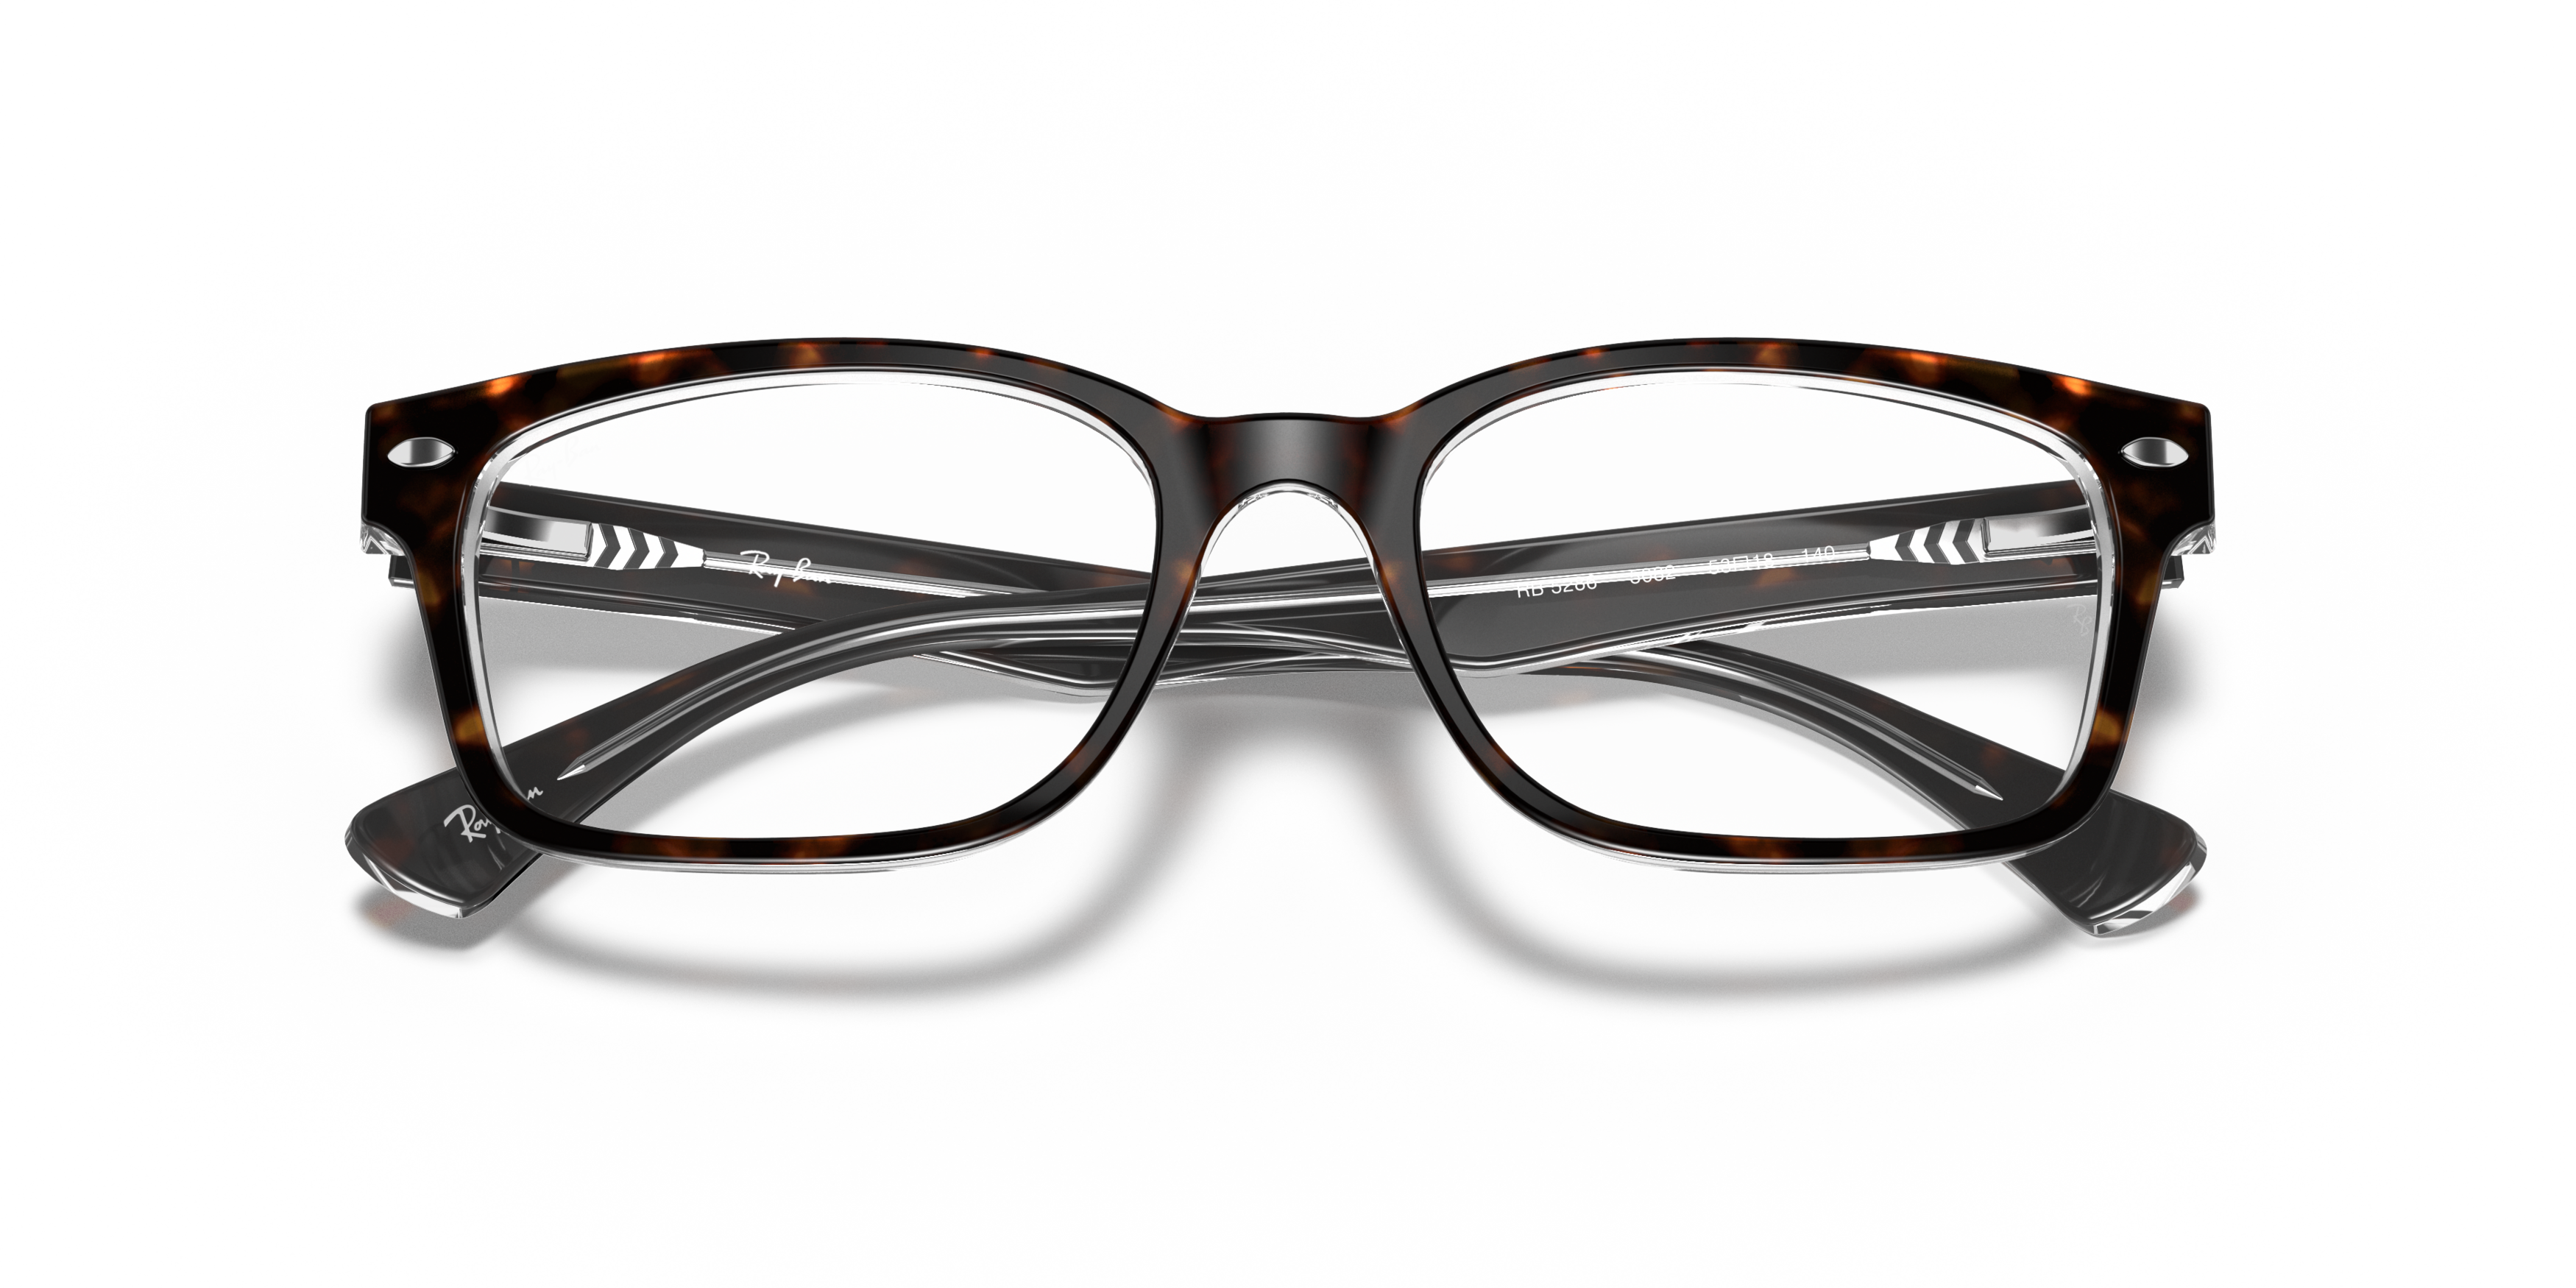 Folded Ray-Ban RX 5286 Glasses Transparent / Tortoise Shell